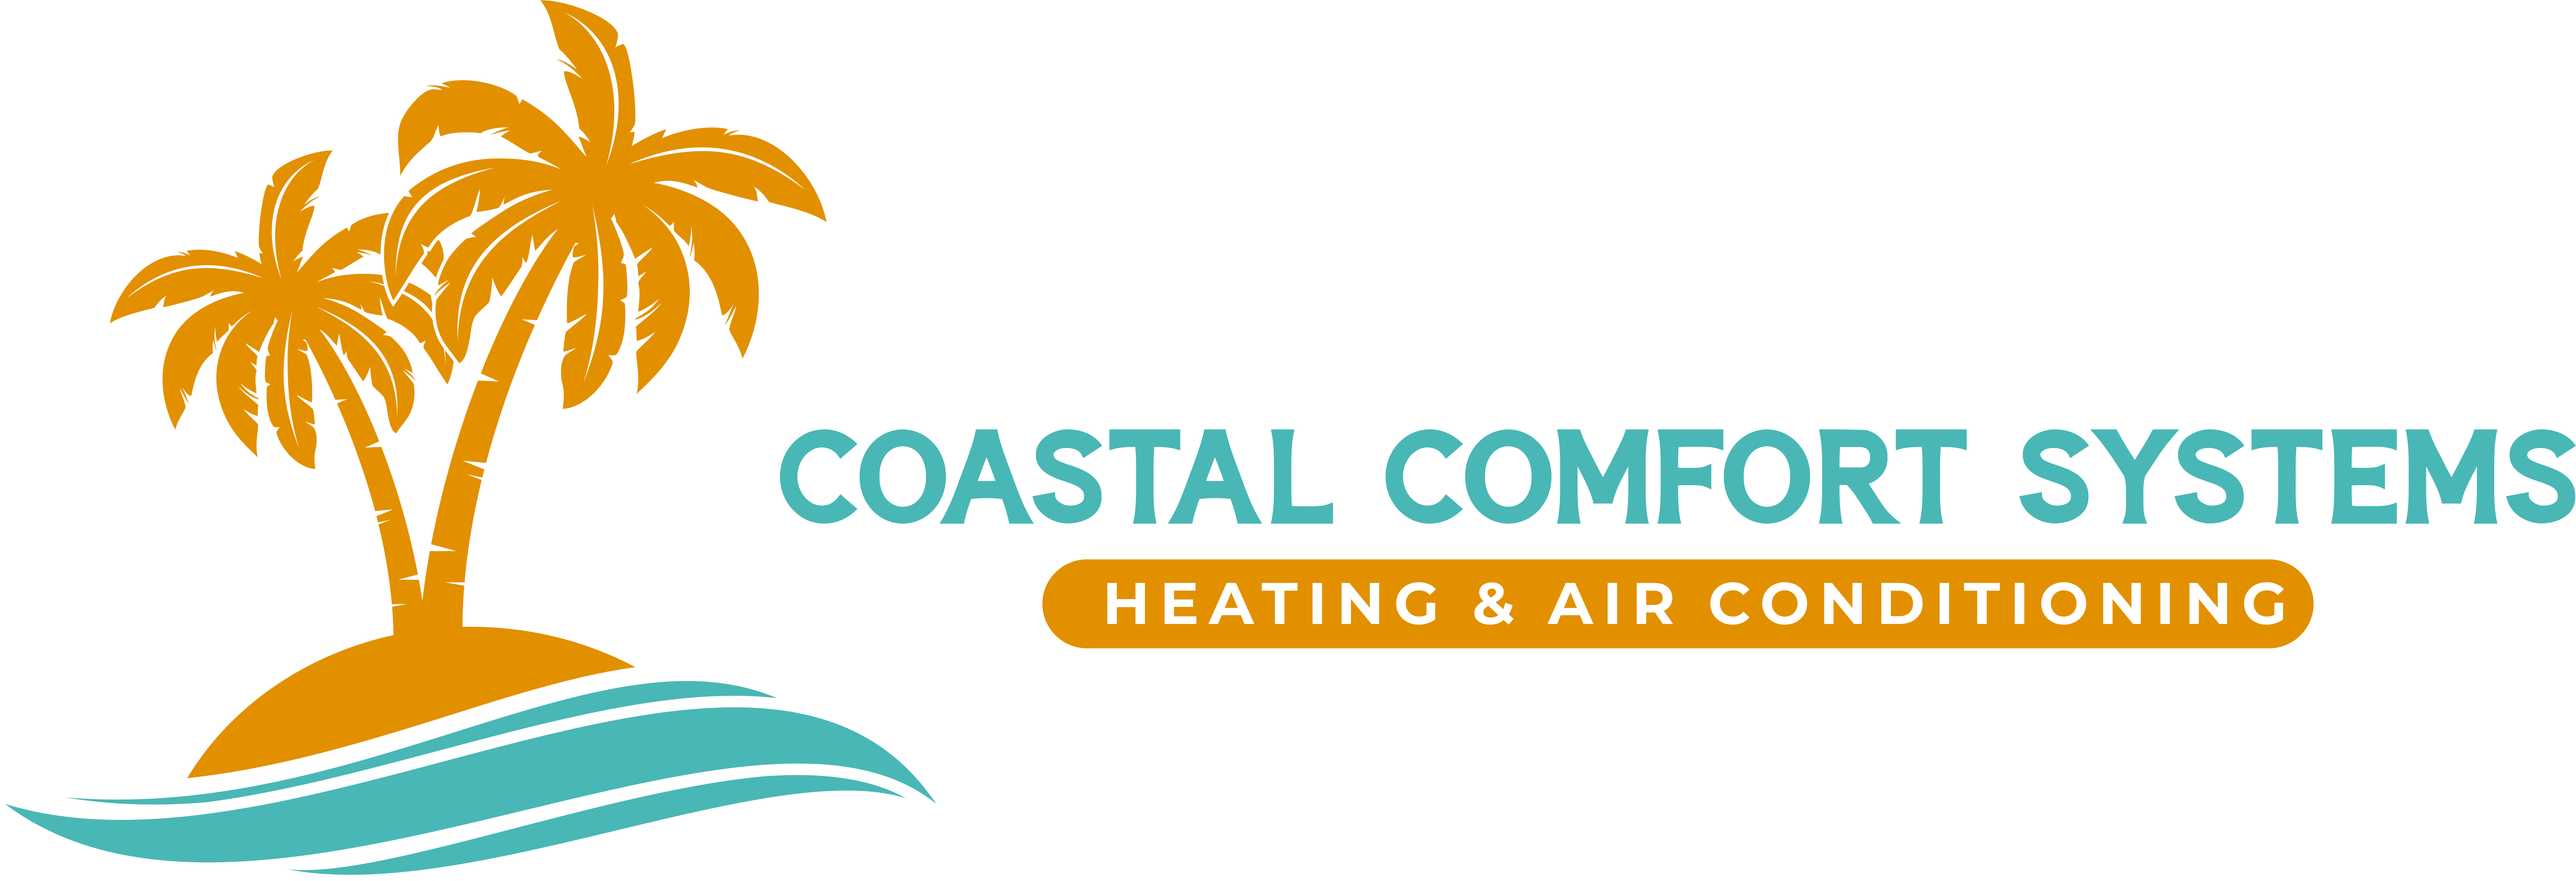 Coastal Comfort Systems